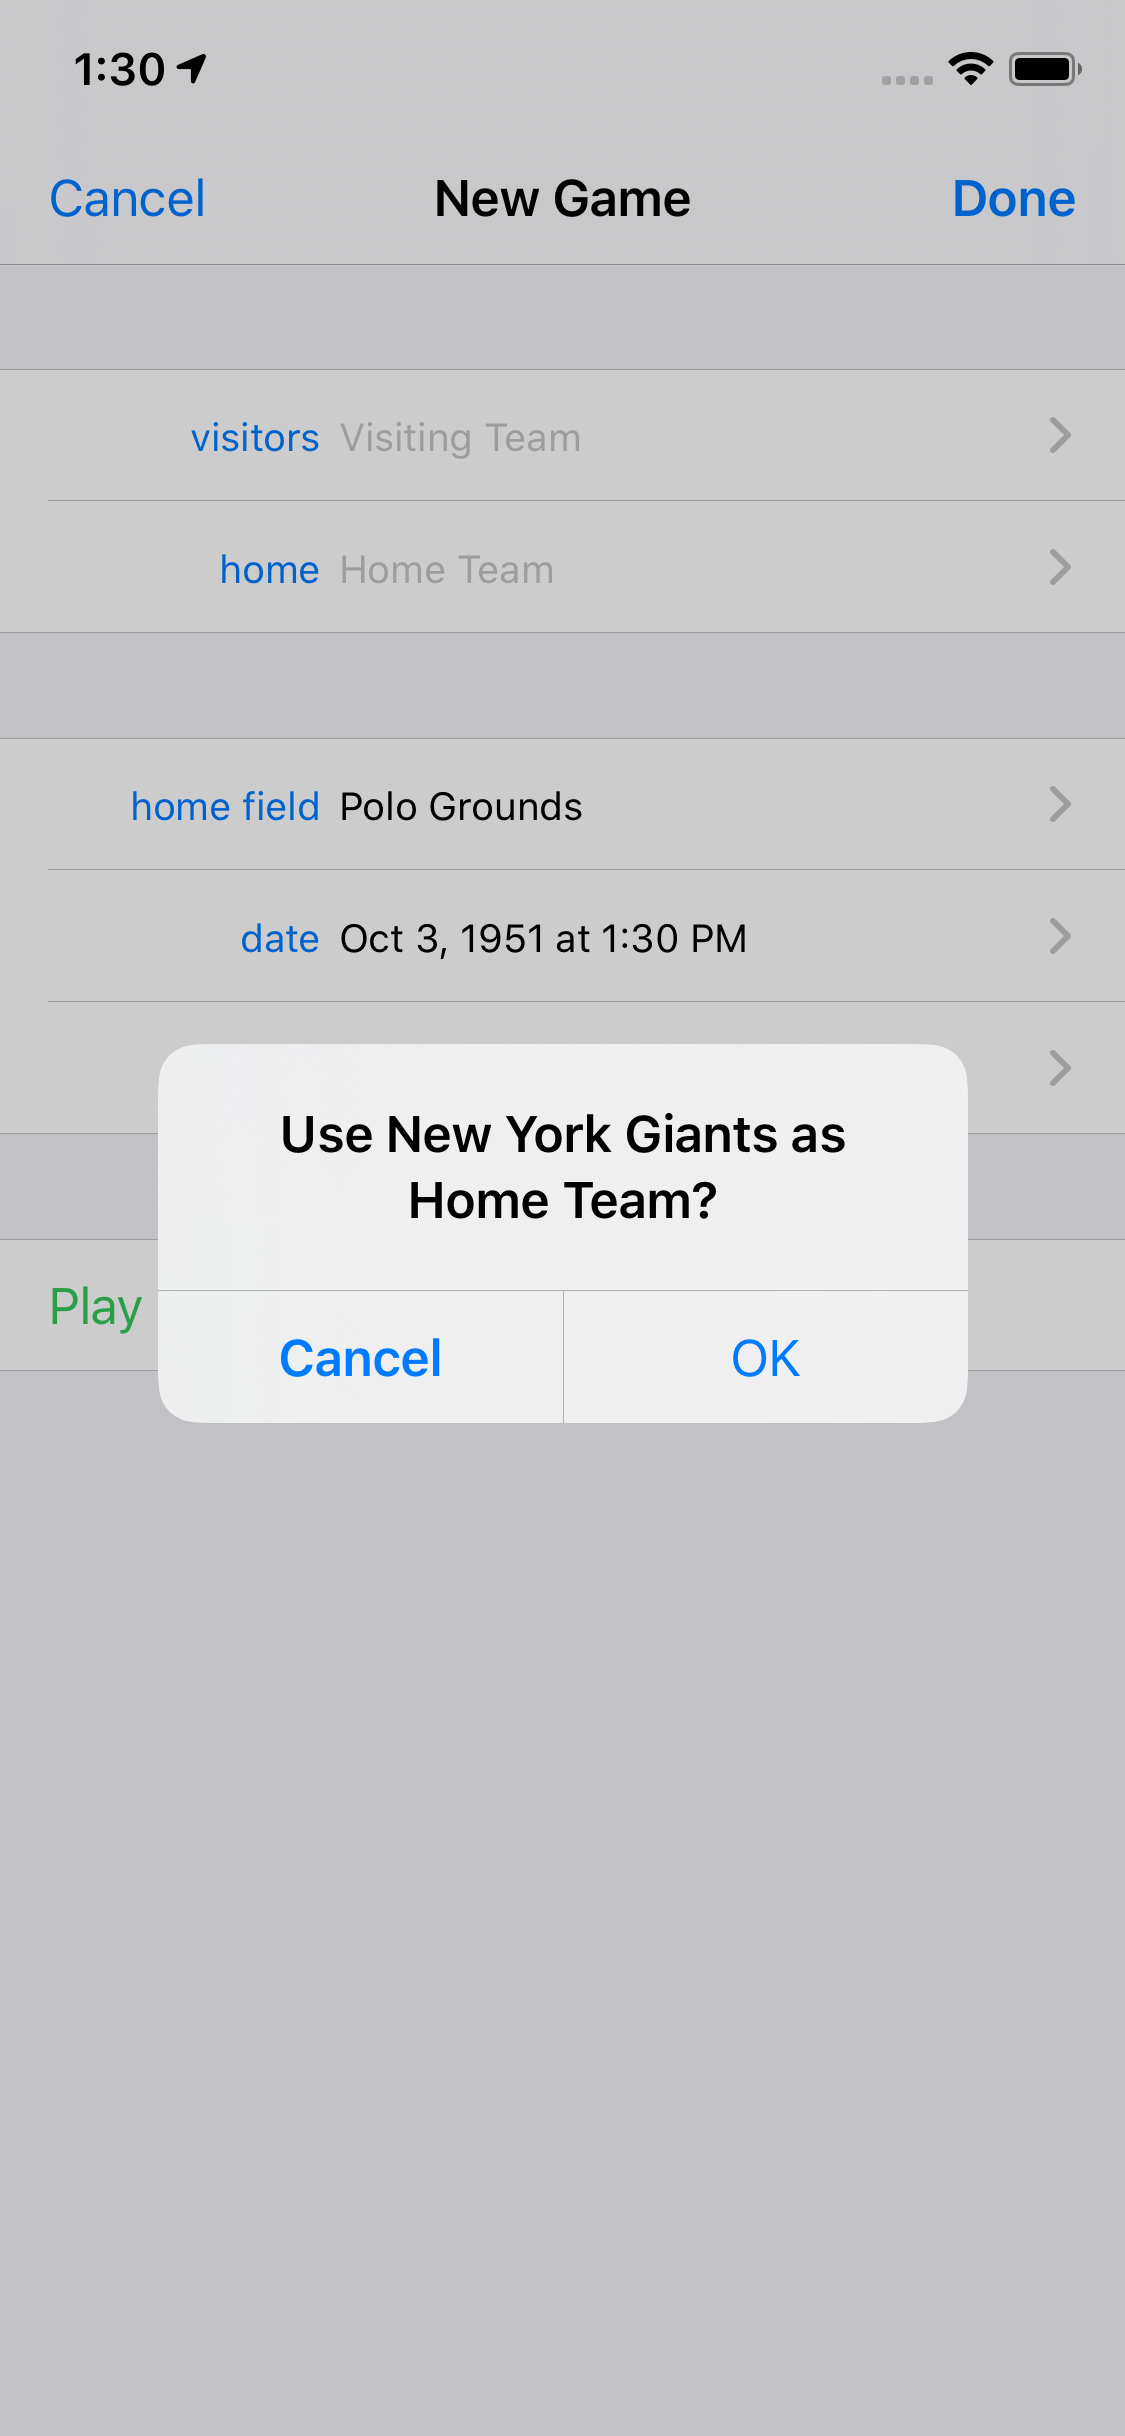 Use New York Giants as Home Team?